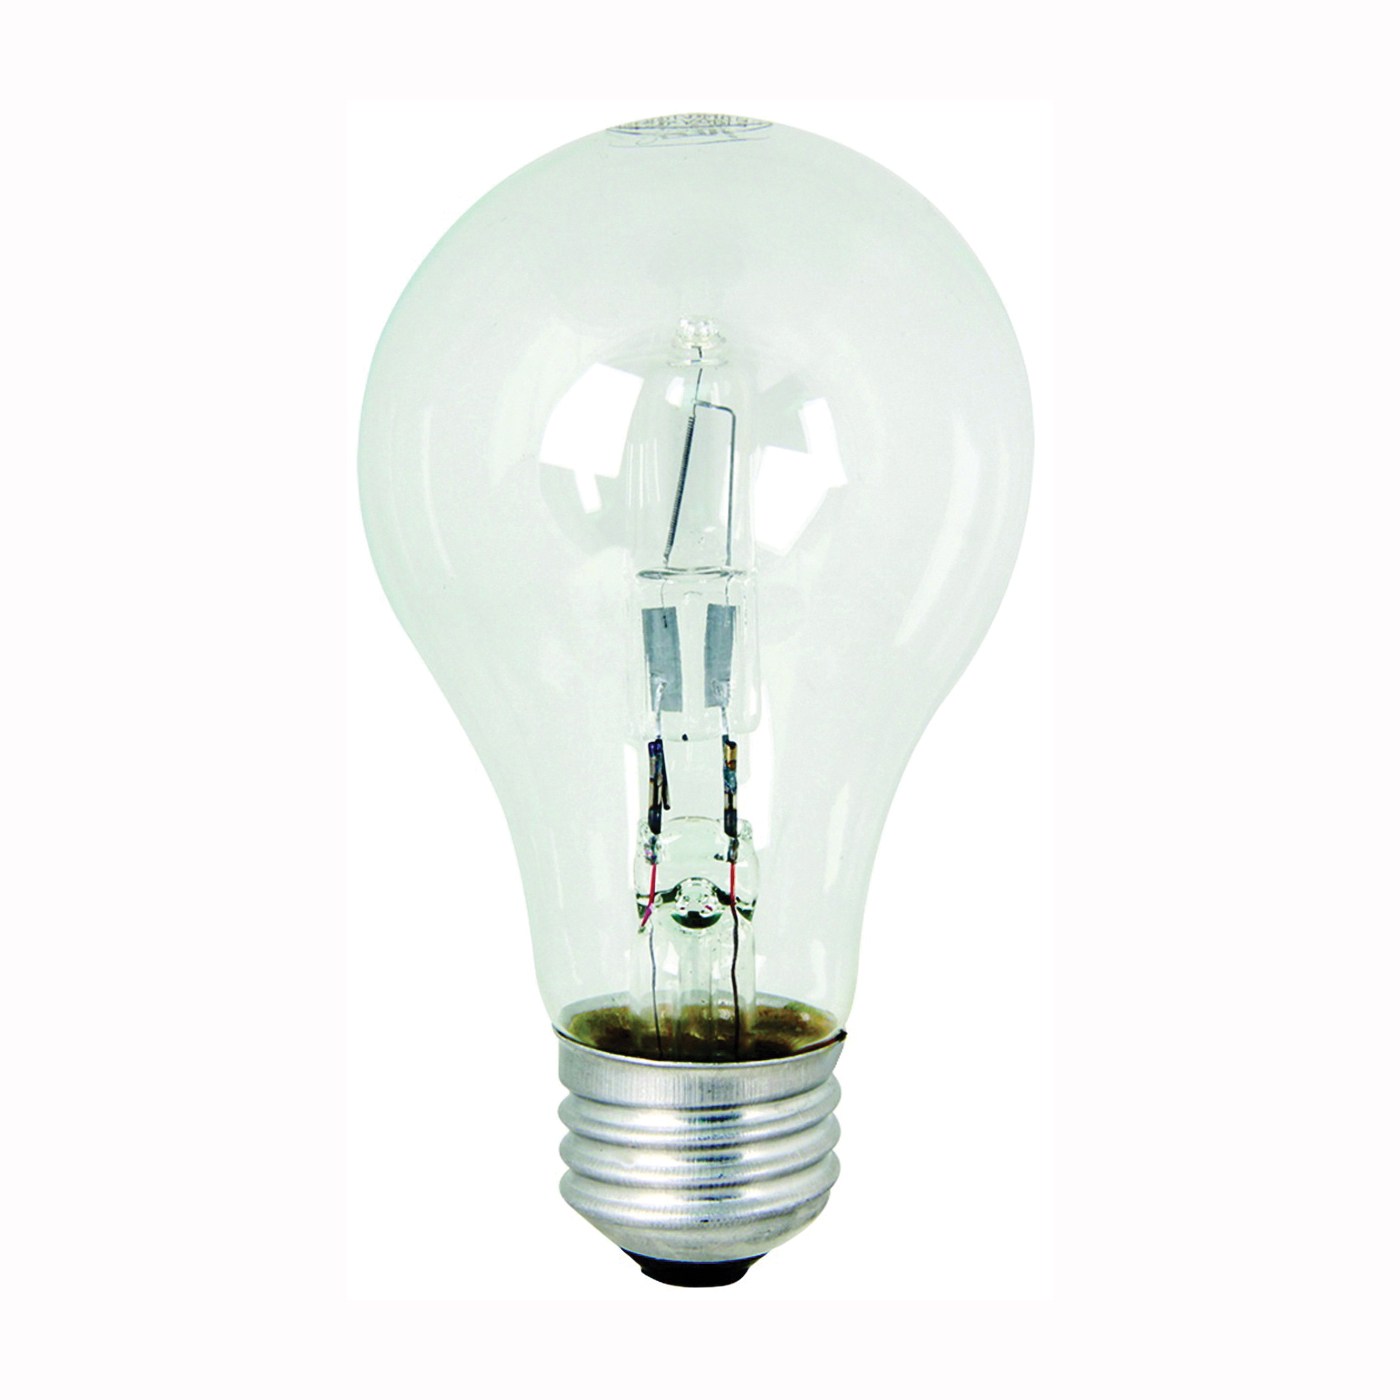 Q72A/CL/2 Halogen Bulb, 72 W, Medium E26 Lamp Base, A19 Lamp, Soft White Light, 1490 Lumens